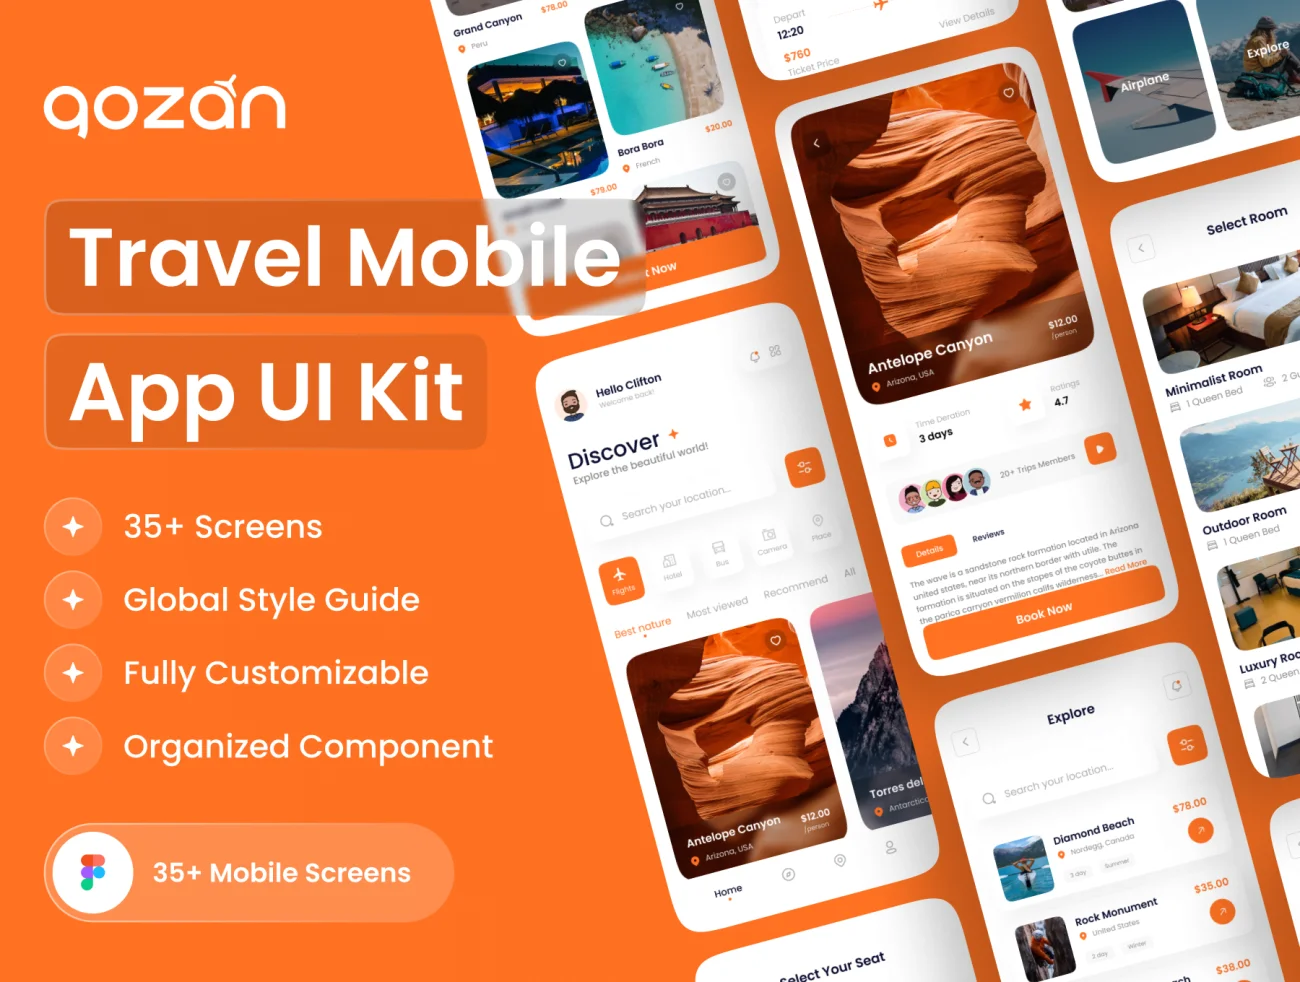 Gozan-旅行移动应用UI工具包 Gozan - Travel Mobile App UI Kit android格式缩略图到位啦UI